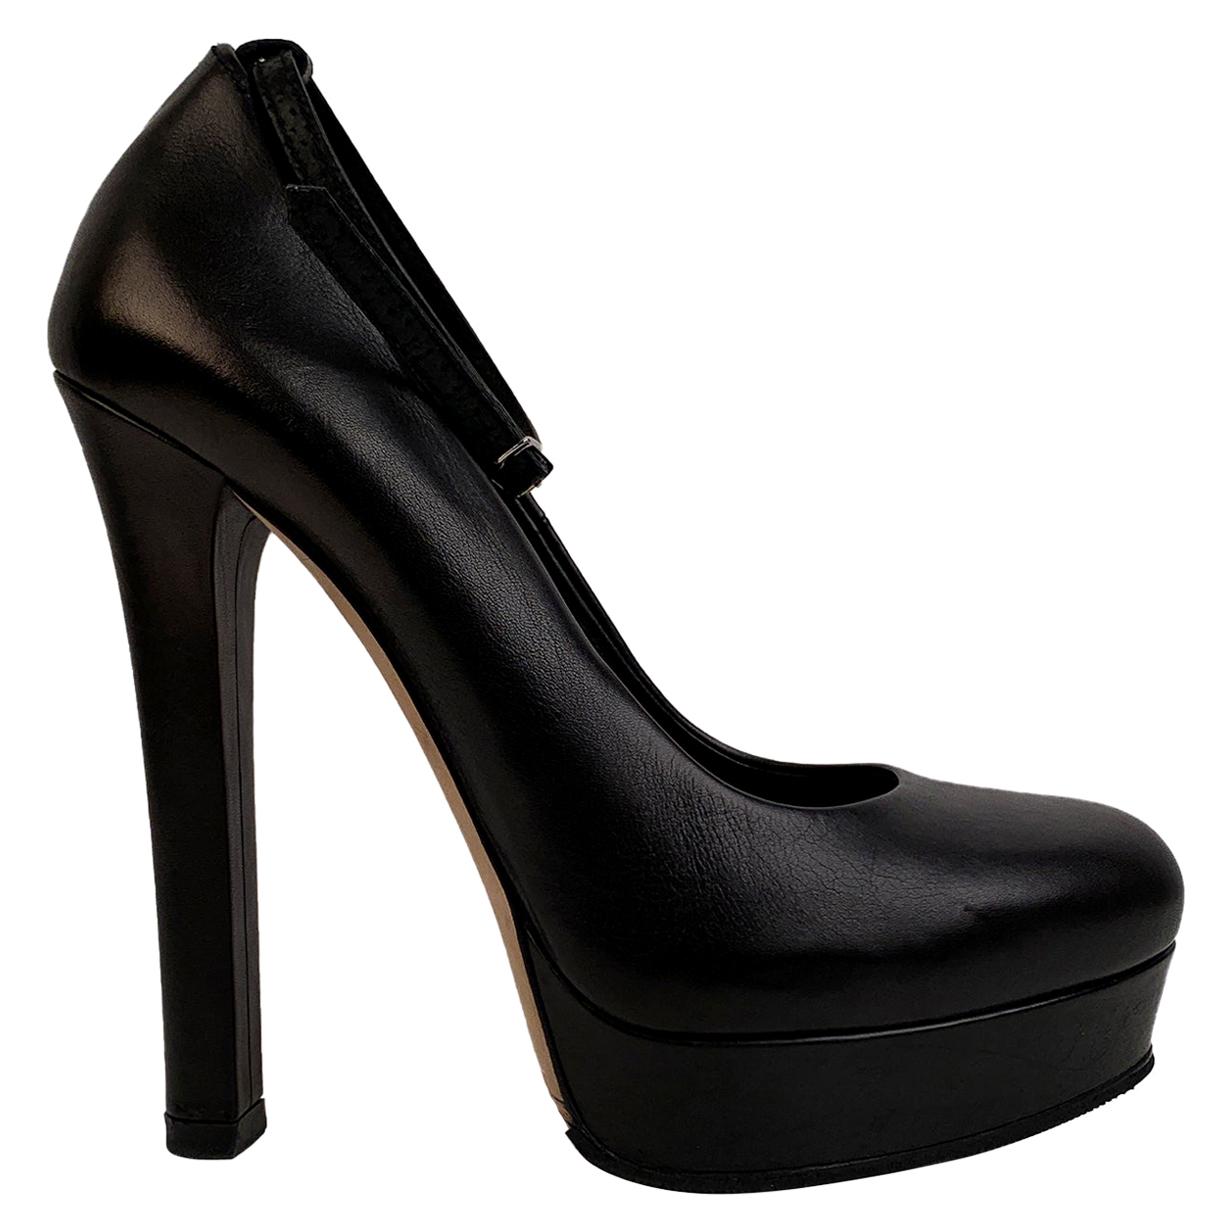 Gucci Black Leather Platform Pumps Heels with Ankle Strap Size 38.5